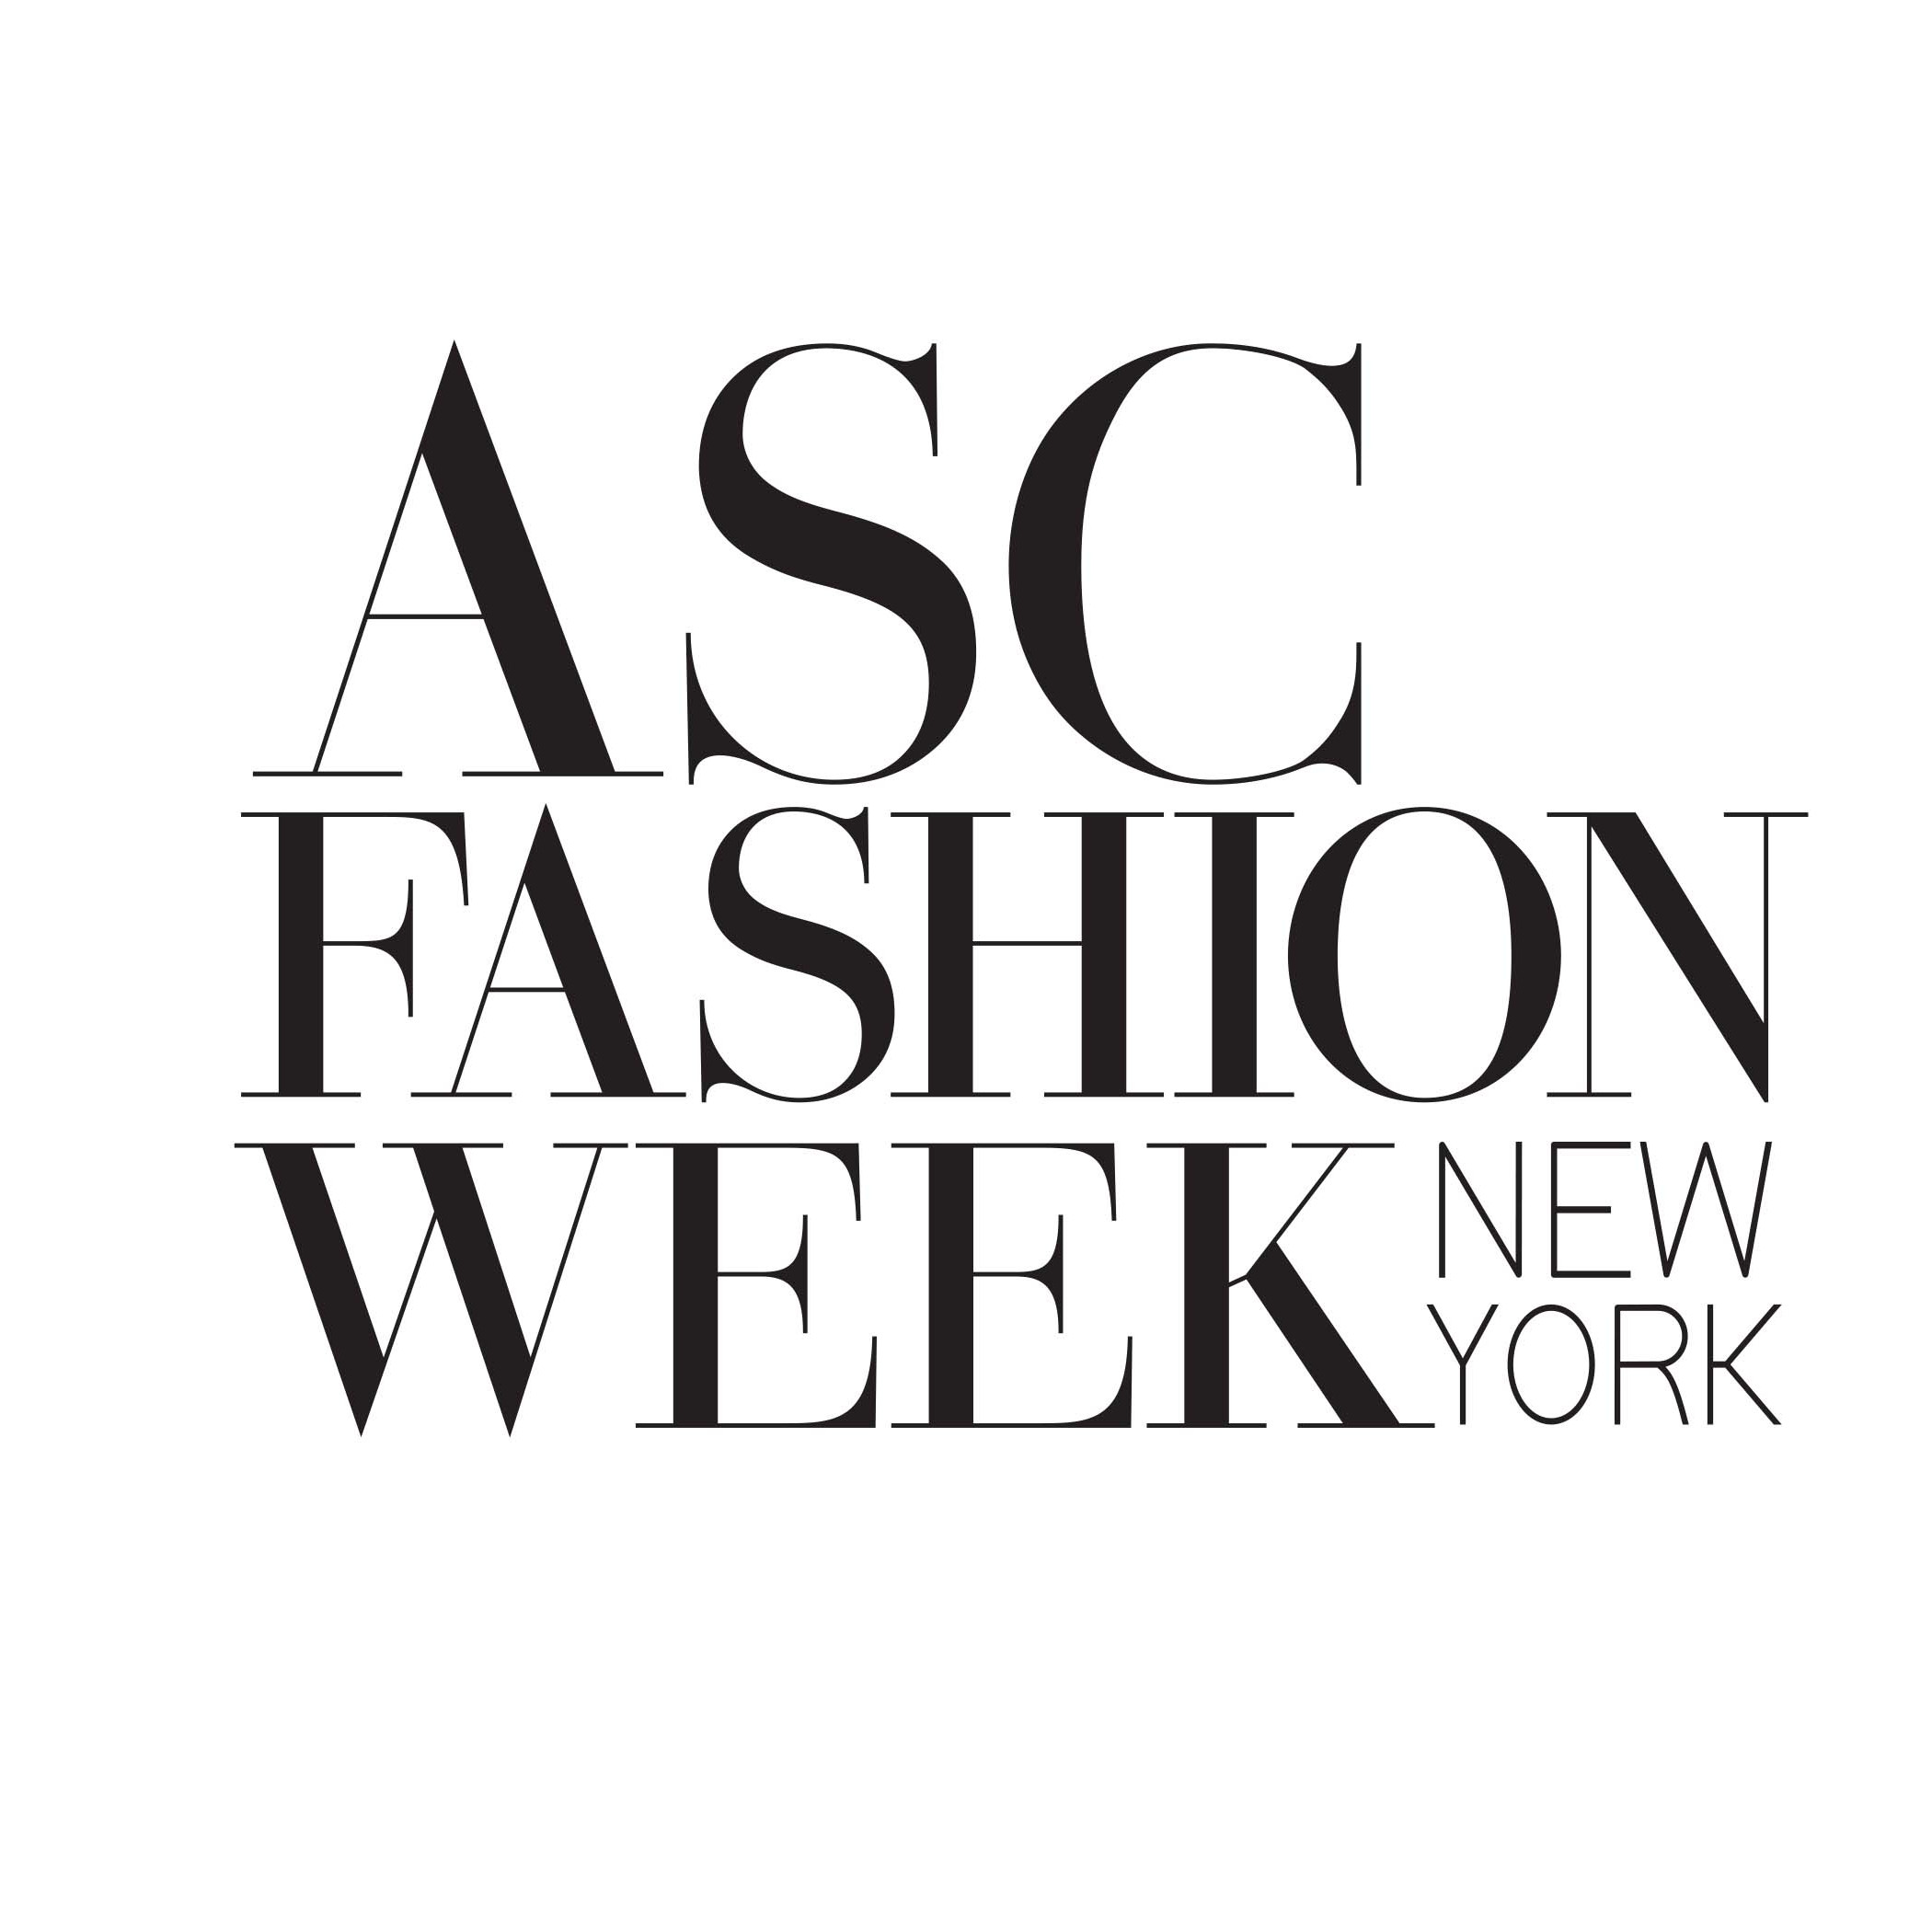 ASC Fashion Week Feb 11-13, 2021